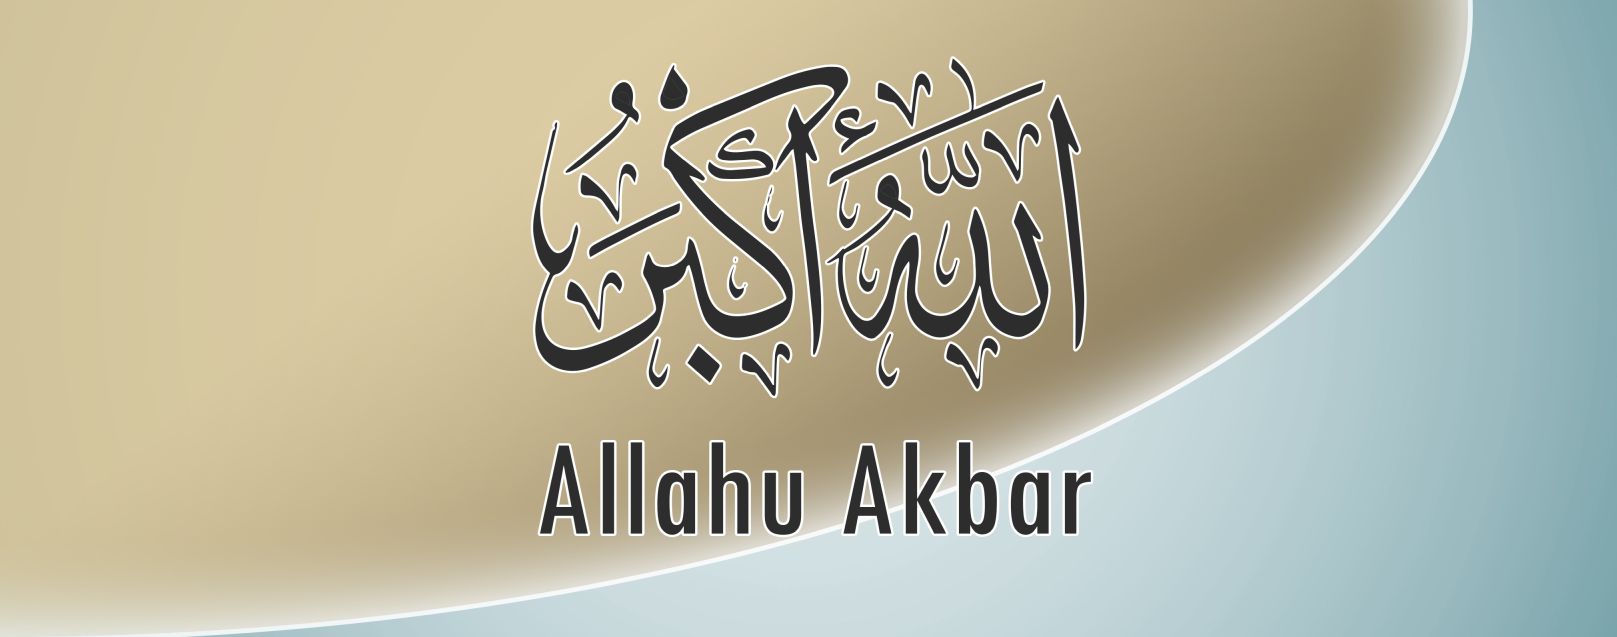 Islam Allah allahu Akbar Ahmadija borba džihad muslimani Hrvatska zajednica mir